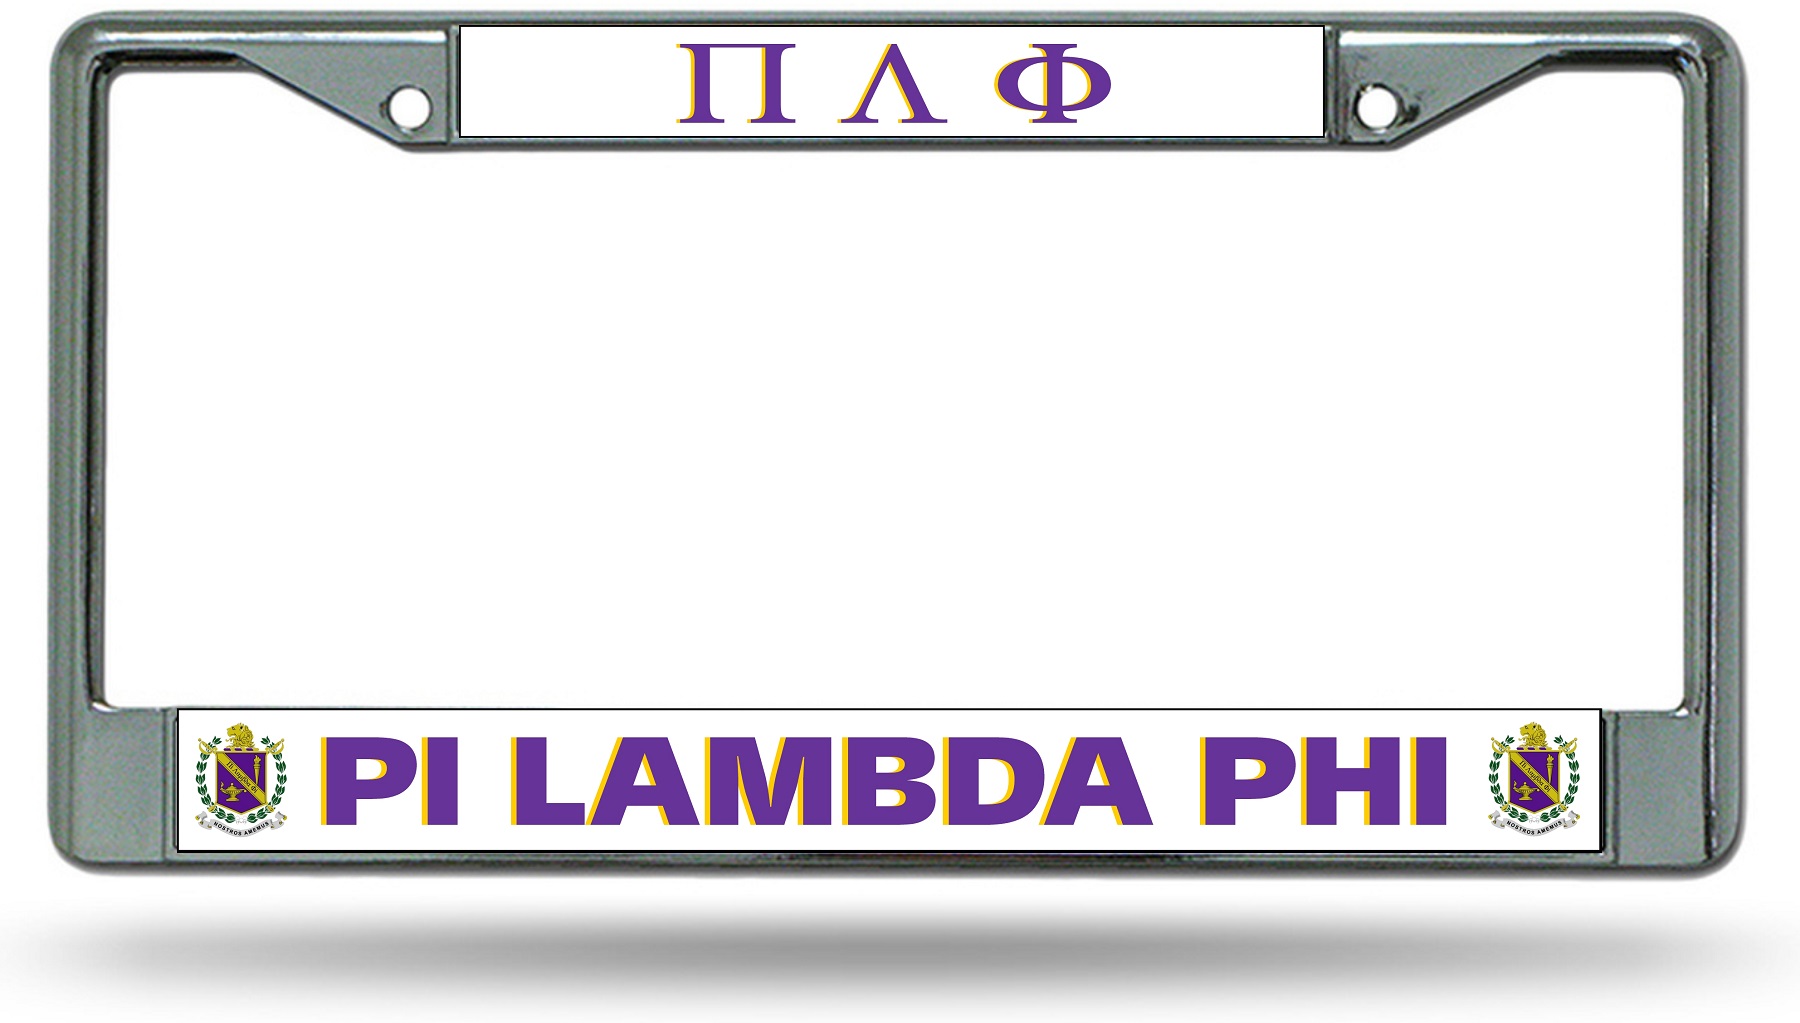 Pi Lambda Phi Chrome License Plate FRAME